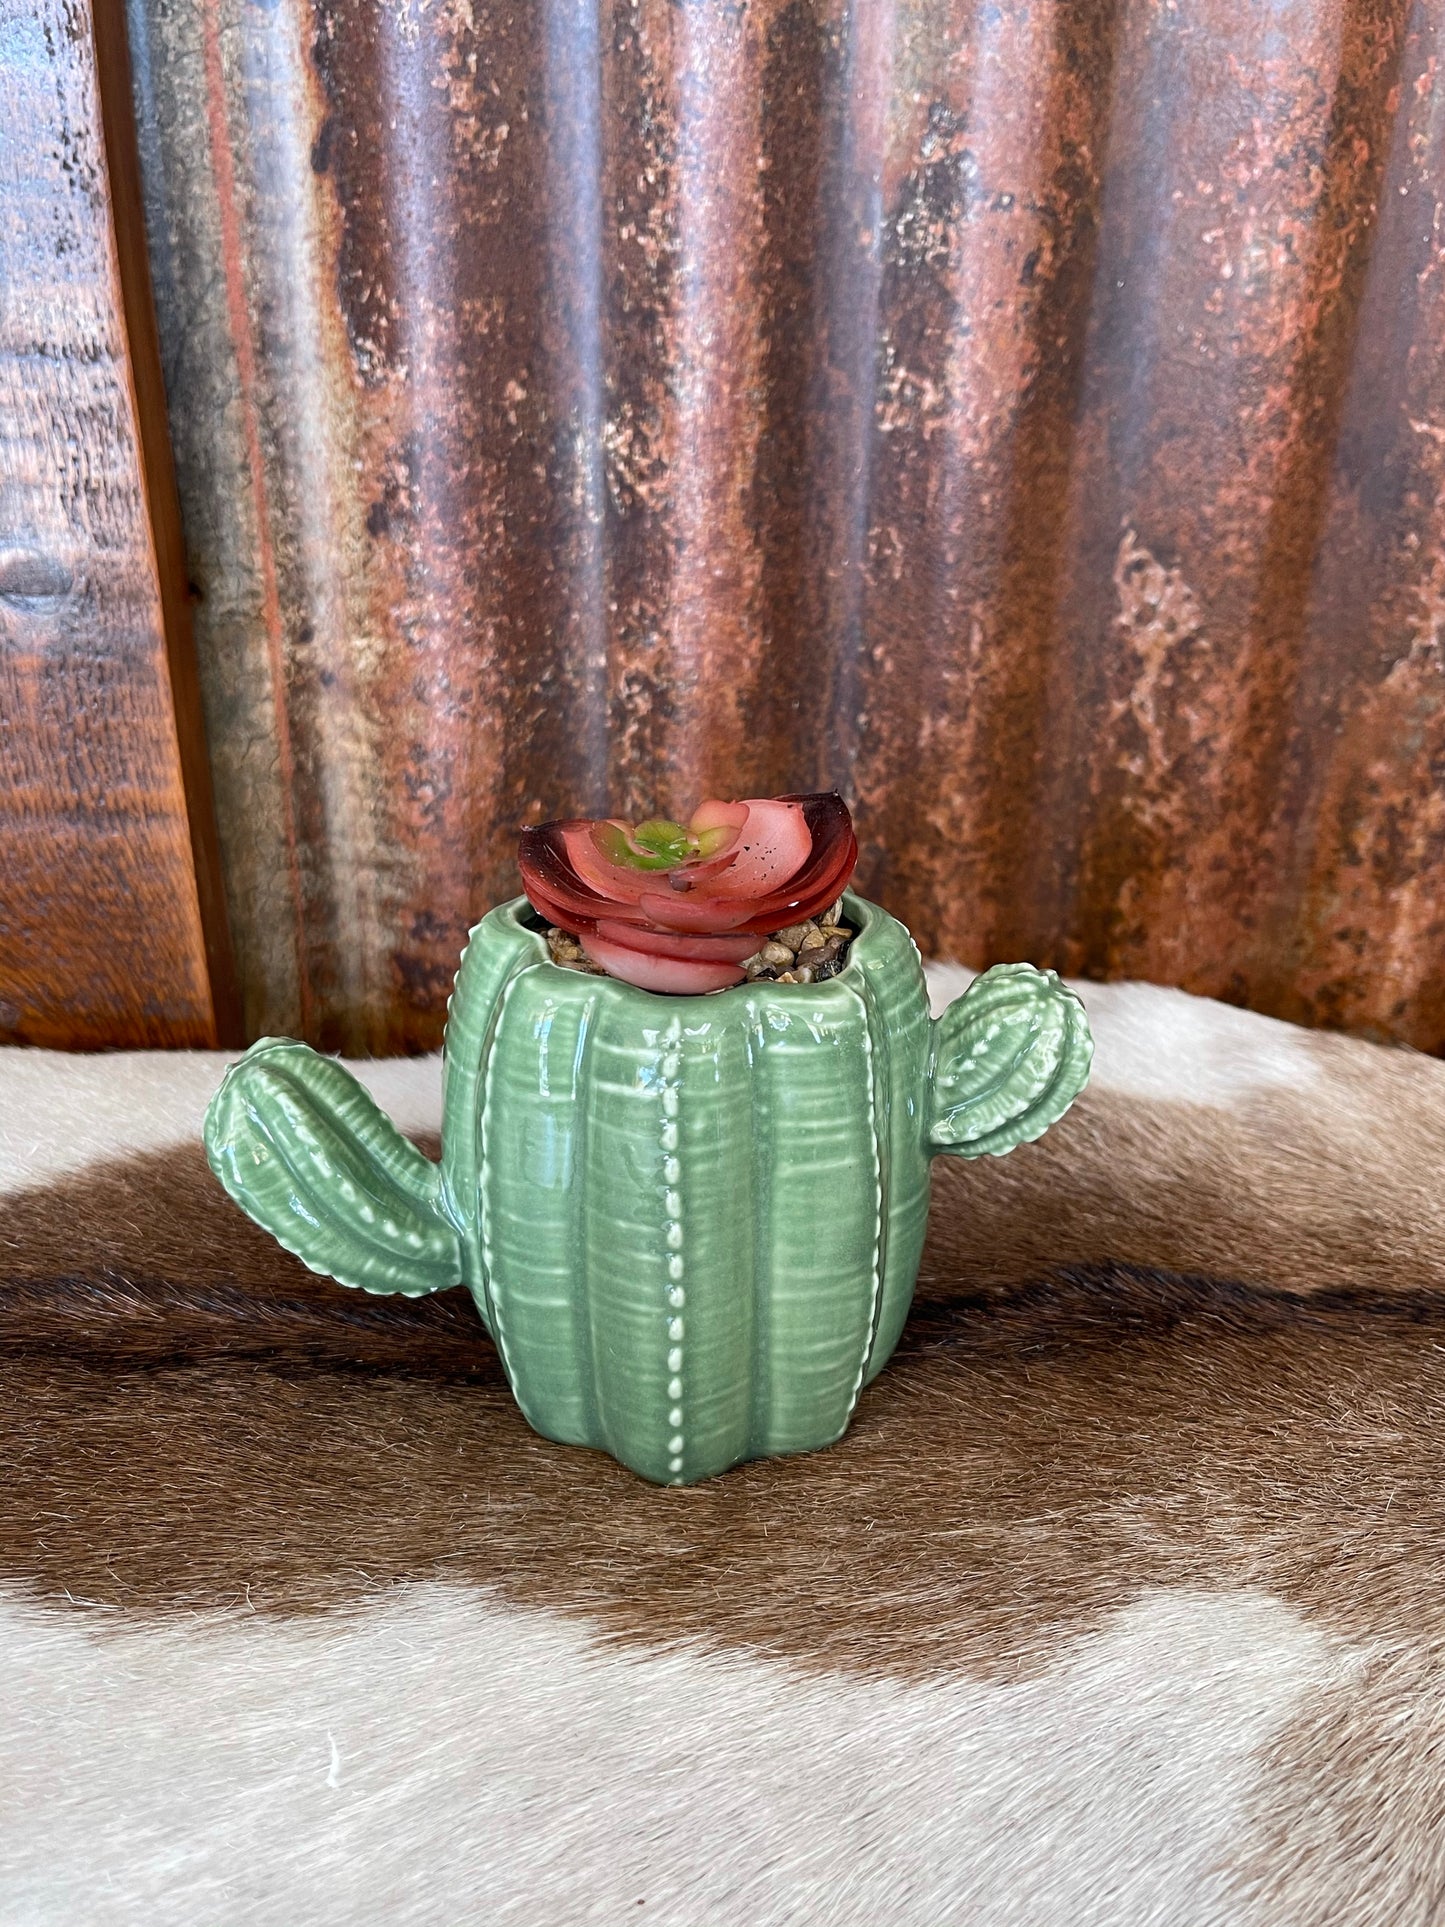 Giftware Faux Succulent Plant in Ceramic Succulent ME178598